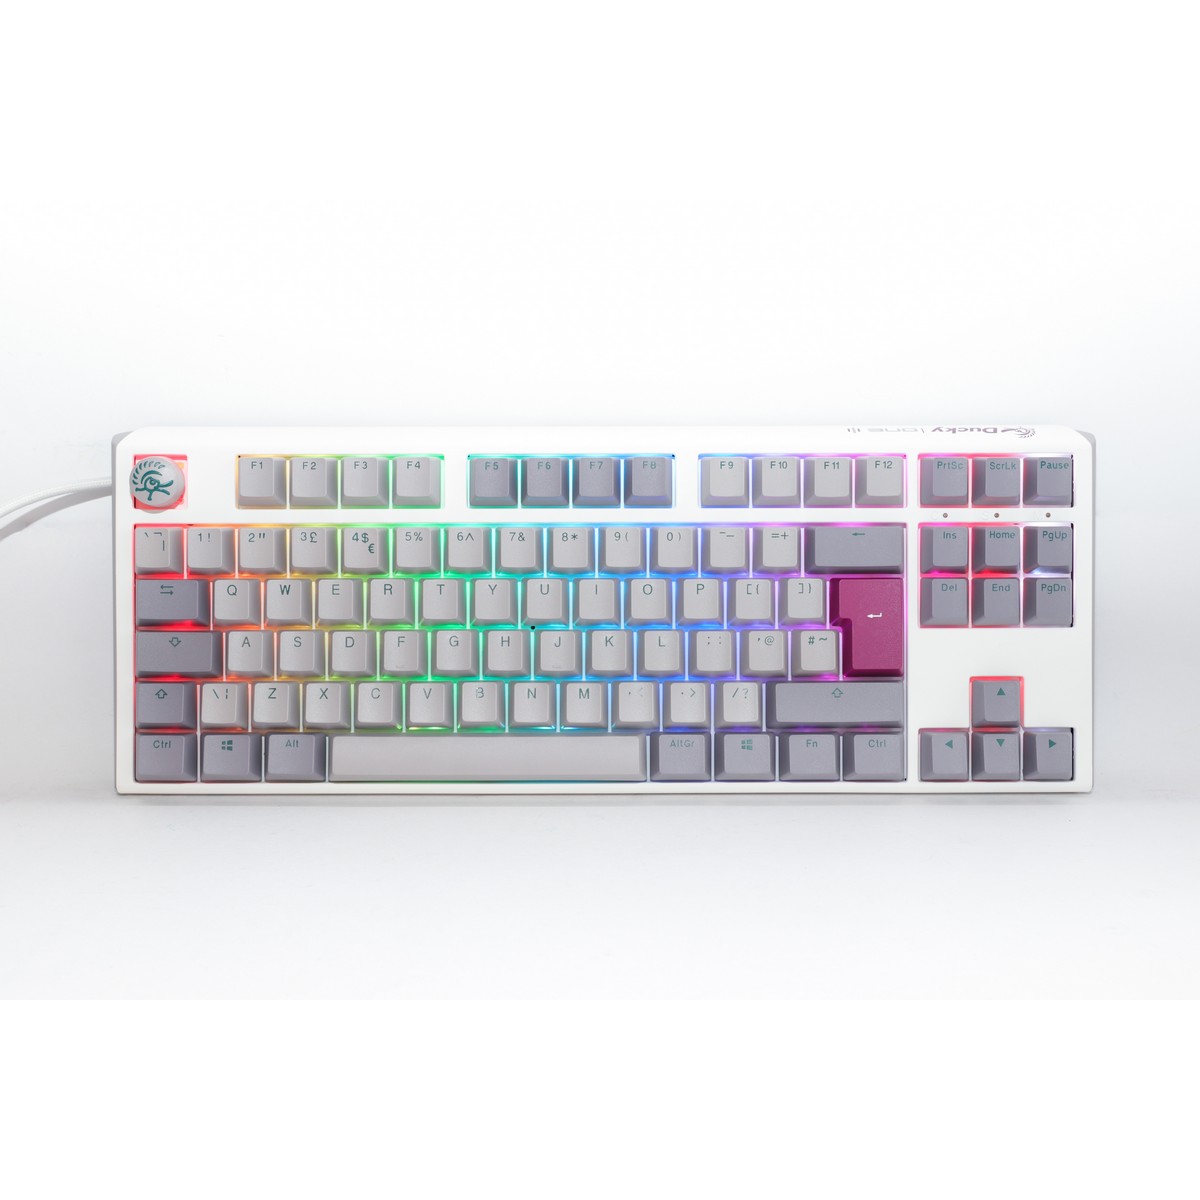 Ducky One 3 Mist TKL 80% USB RGB Mechanical Gaming Keyboard Cherry MX Red Switch - UK Layout